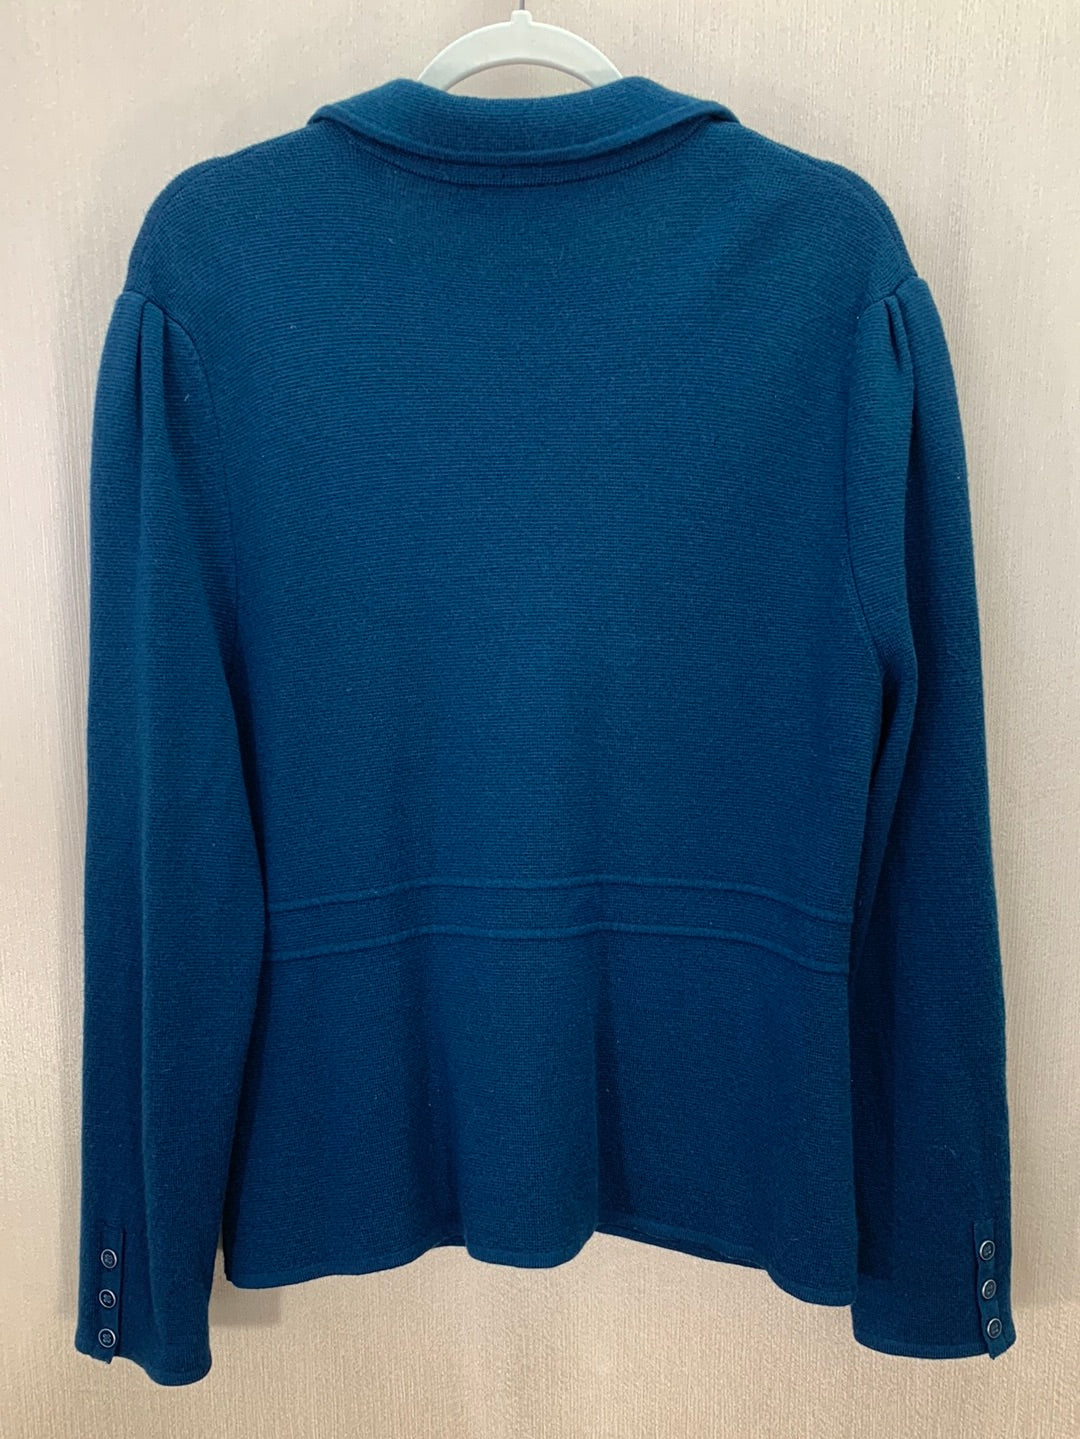 TALBOTS dark blue 100% Merino Wool Sweater Blazer Cardigan - XL